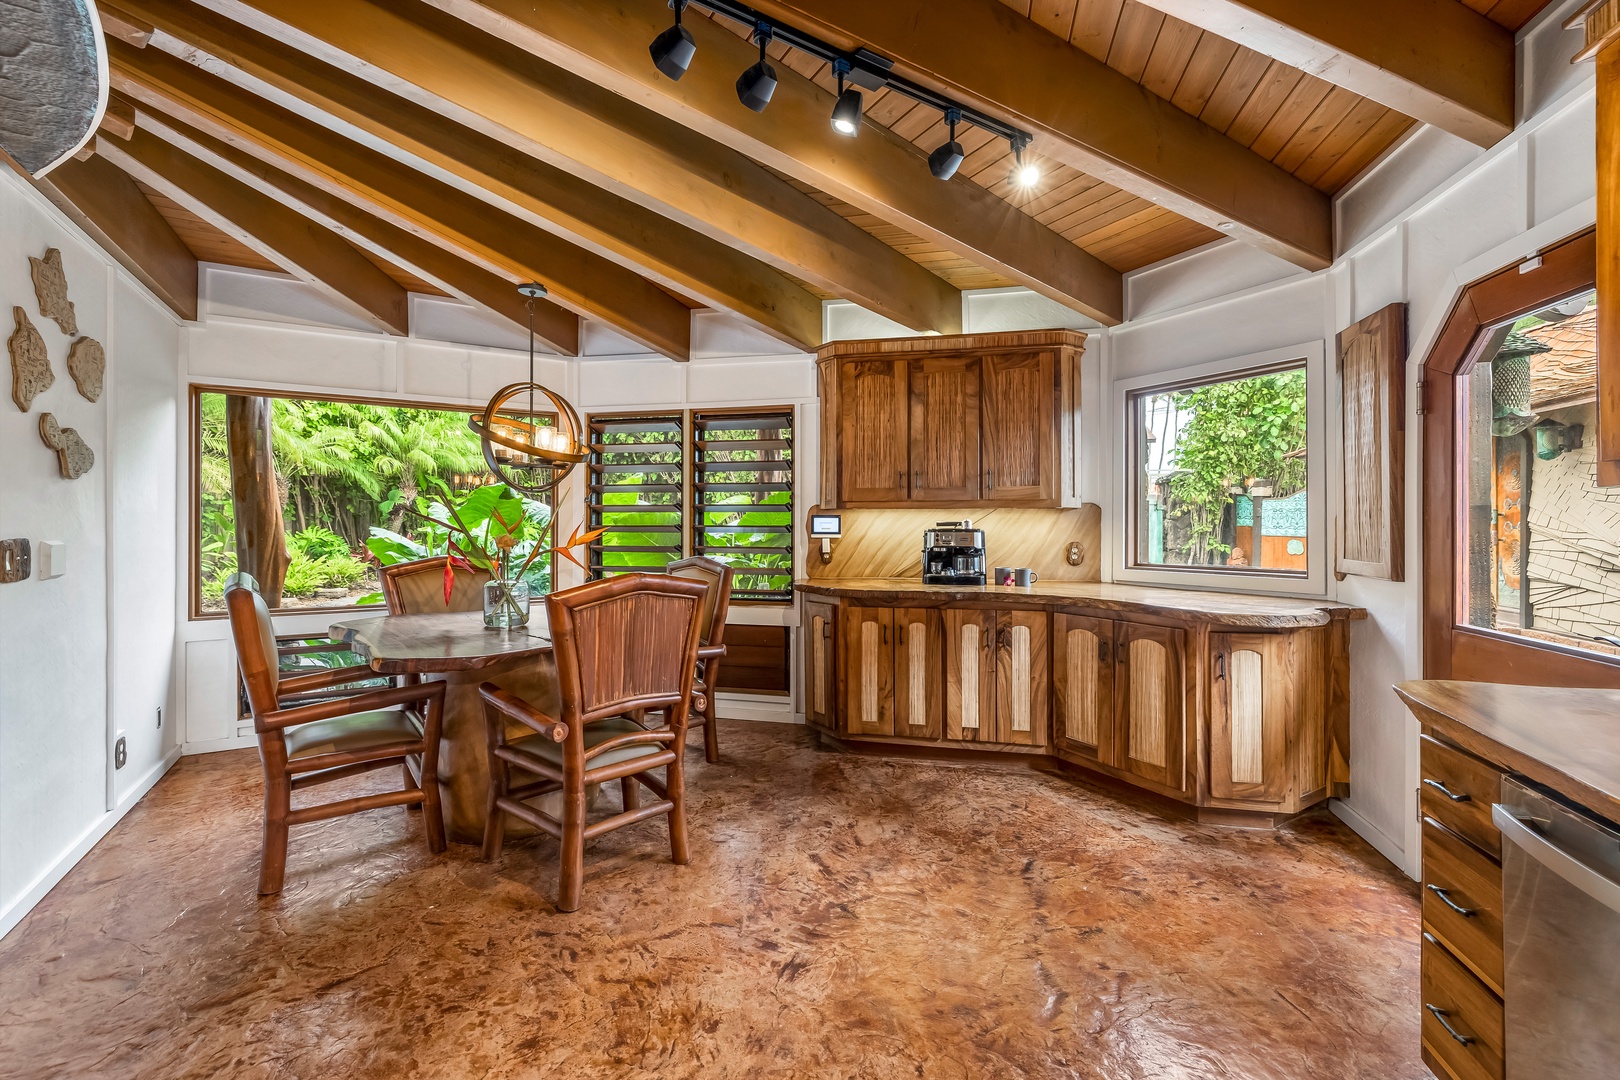 Waimanalo Vacation Rentals, Hawaii Hobbit House - Your tropical pradise awaits!